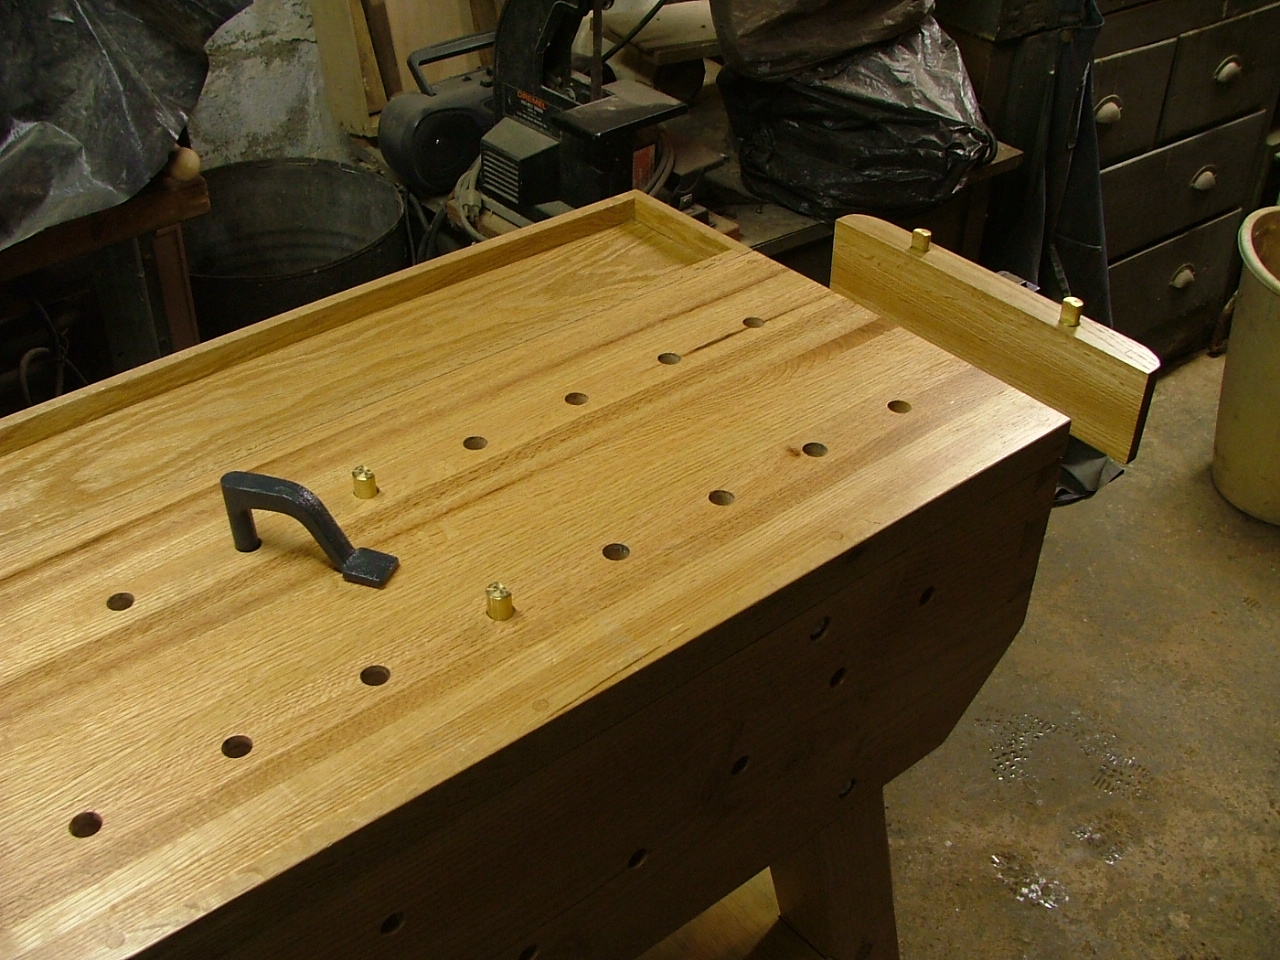 My Work Bench | KiltedKacher's Woodworking Site